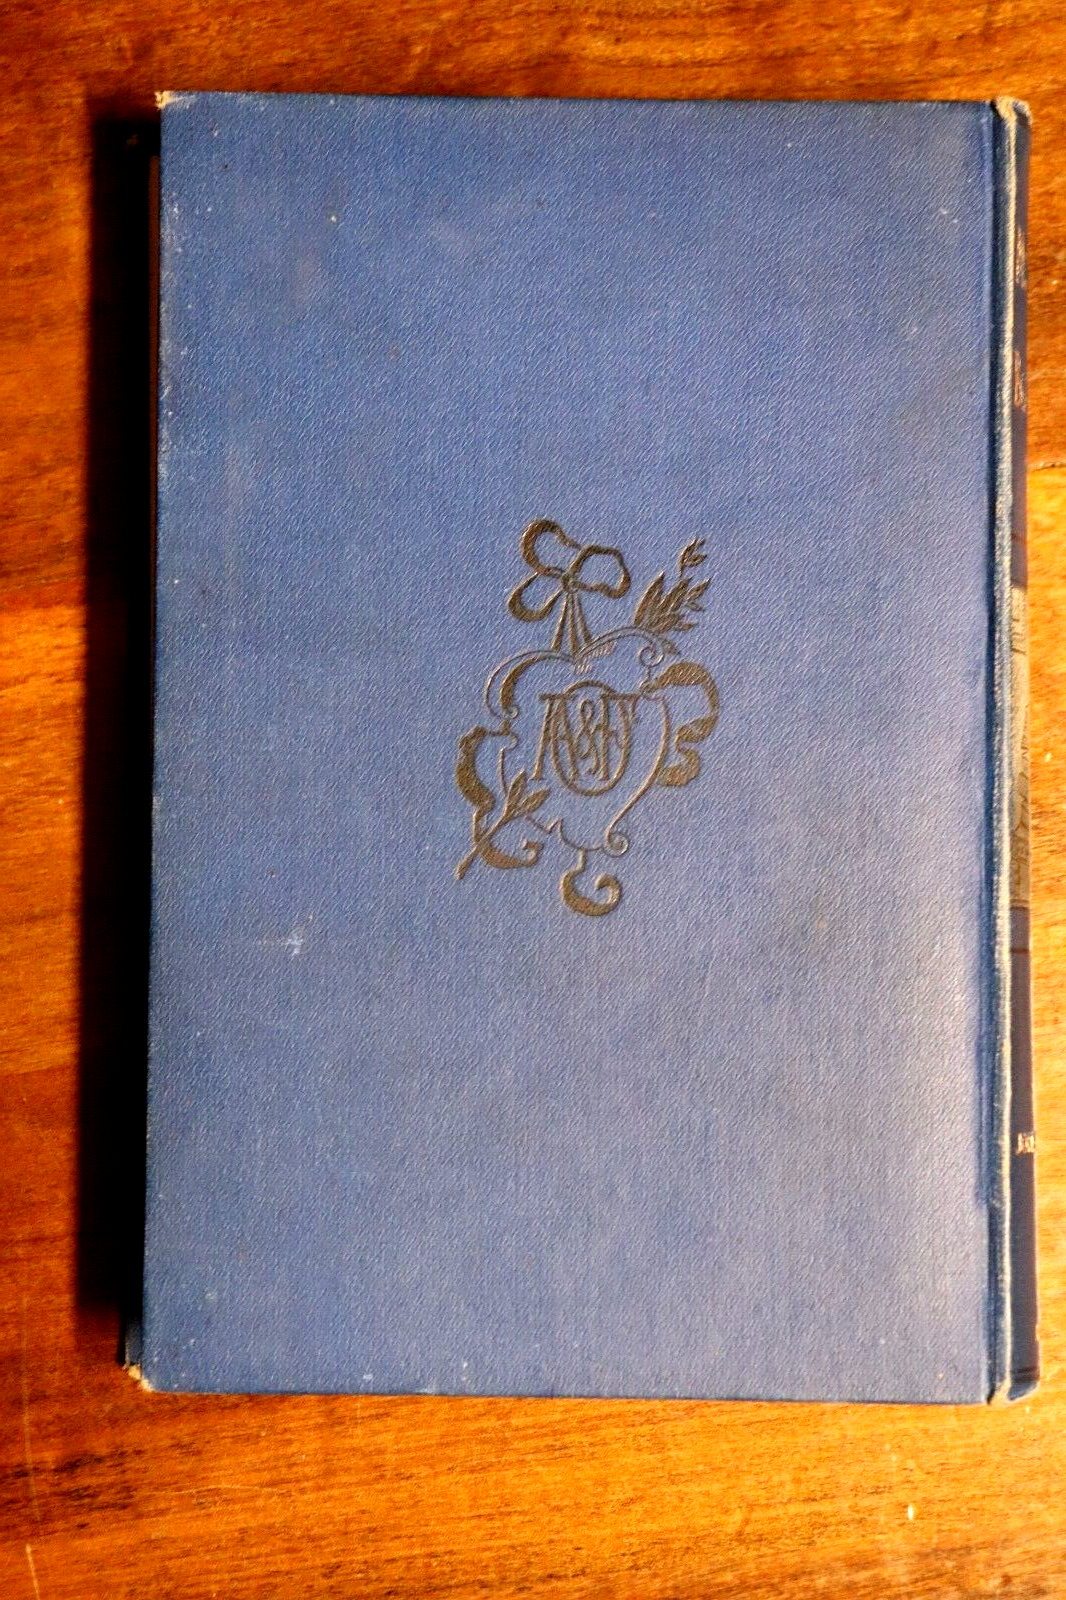 More Bits From Blinkbonny by J Strathesk - 1887 - Antique Book Novel Scotland